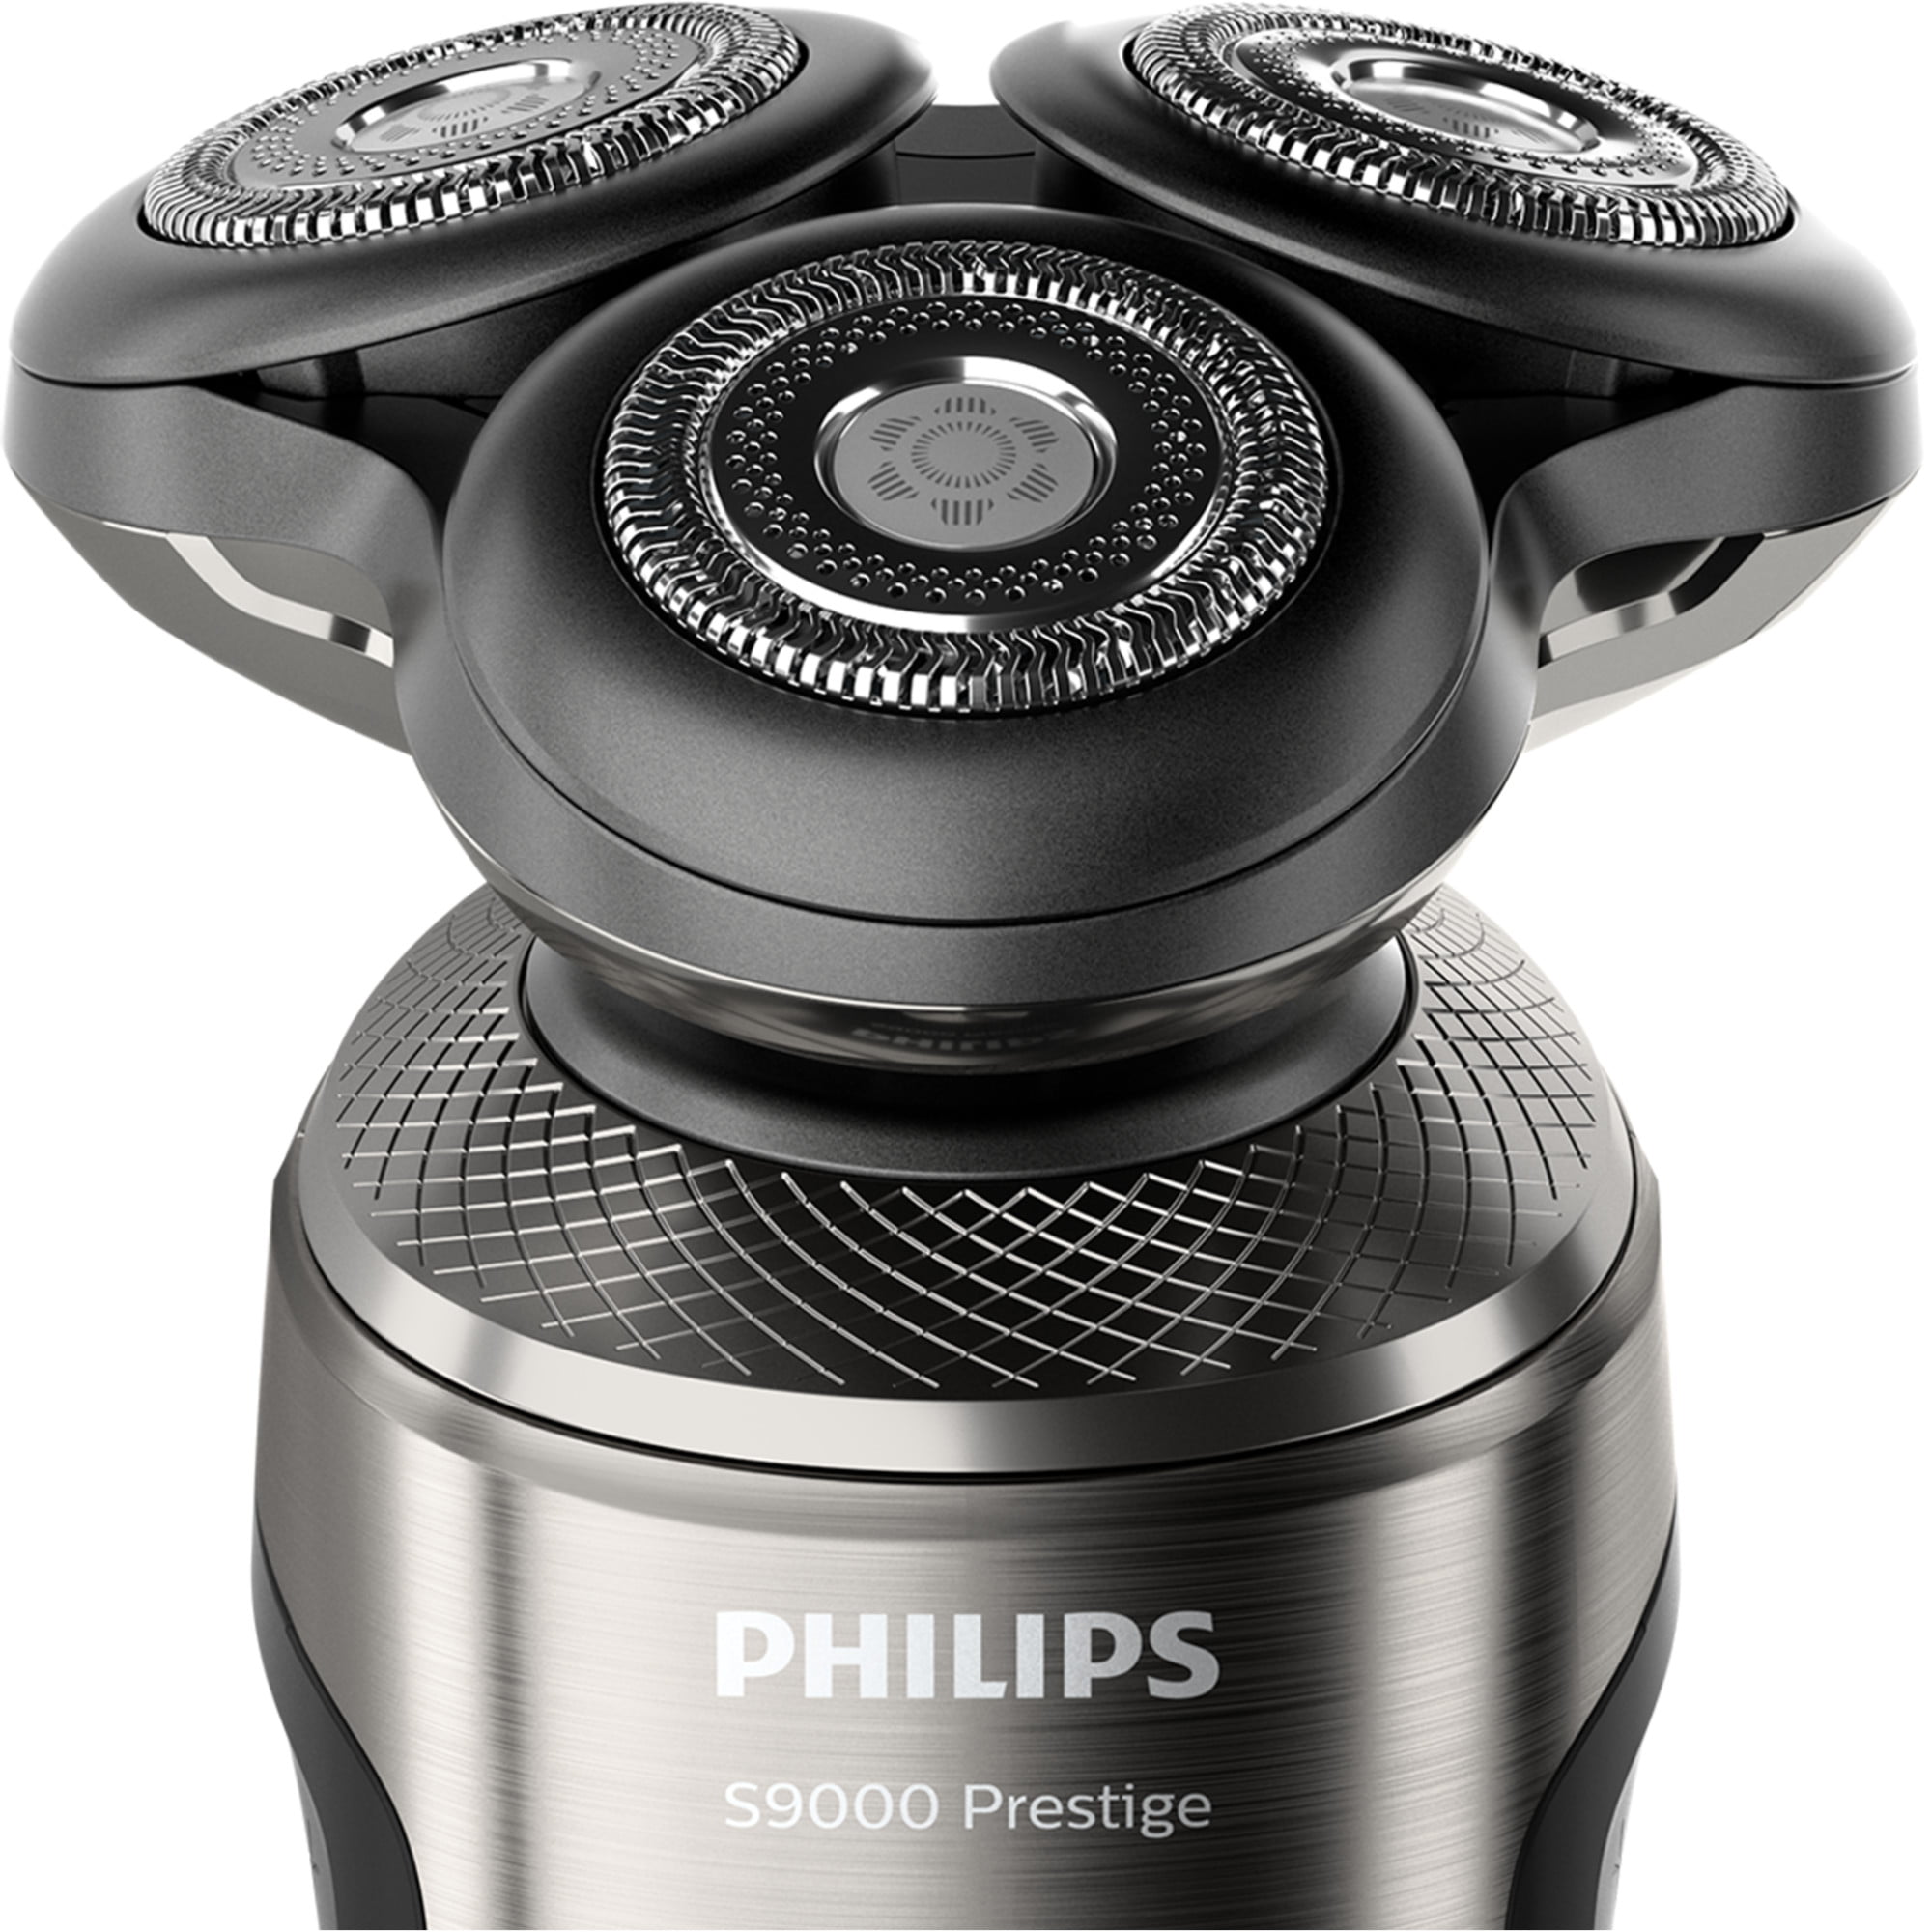 Philips Norelco Shaving Head for Shaver Series 9000 Prestige, SH98/72